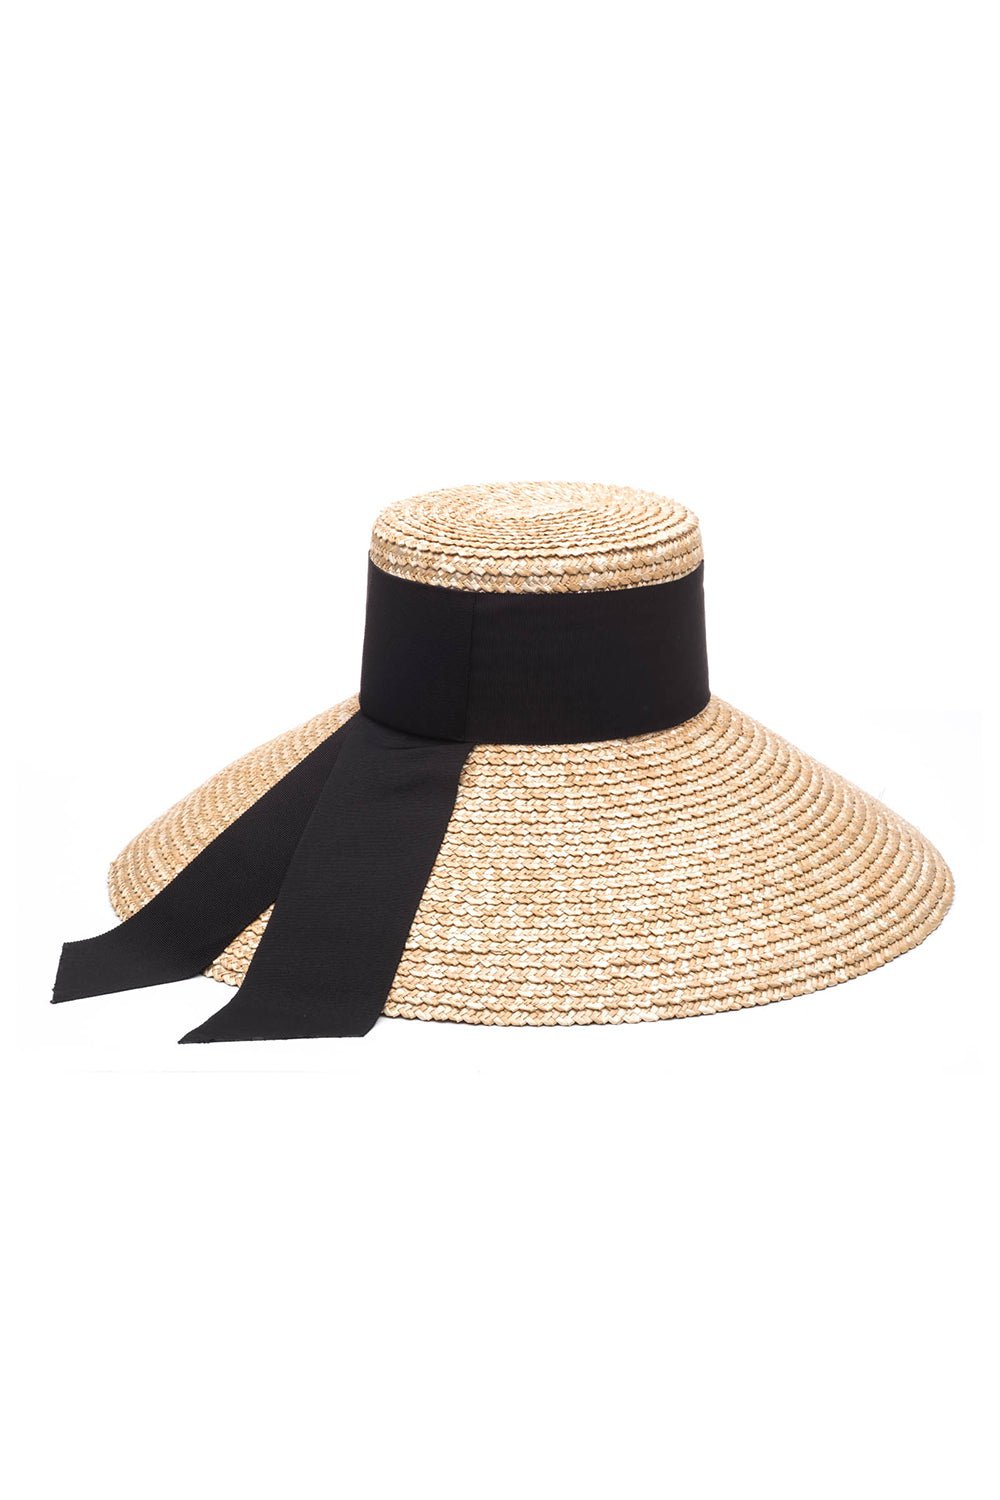 EUGENIA KIM-Mirabel Hat - Black-NAT/BLK